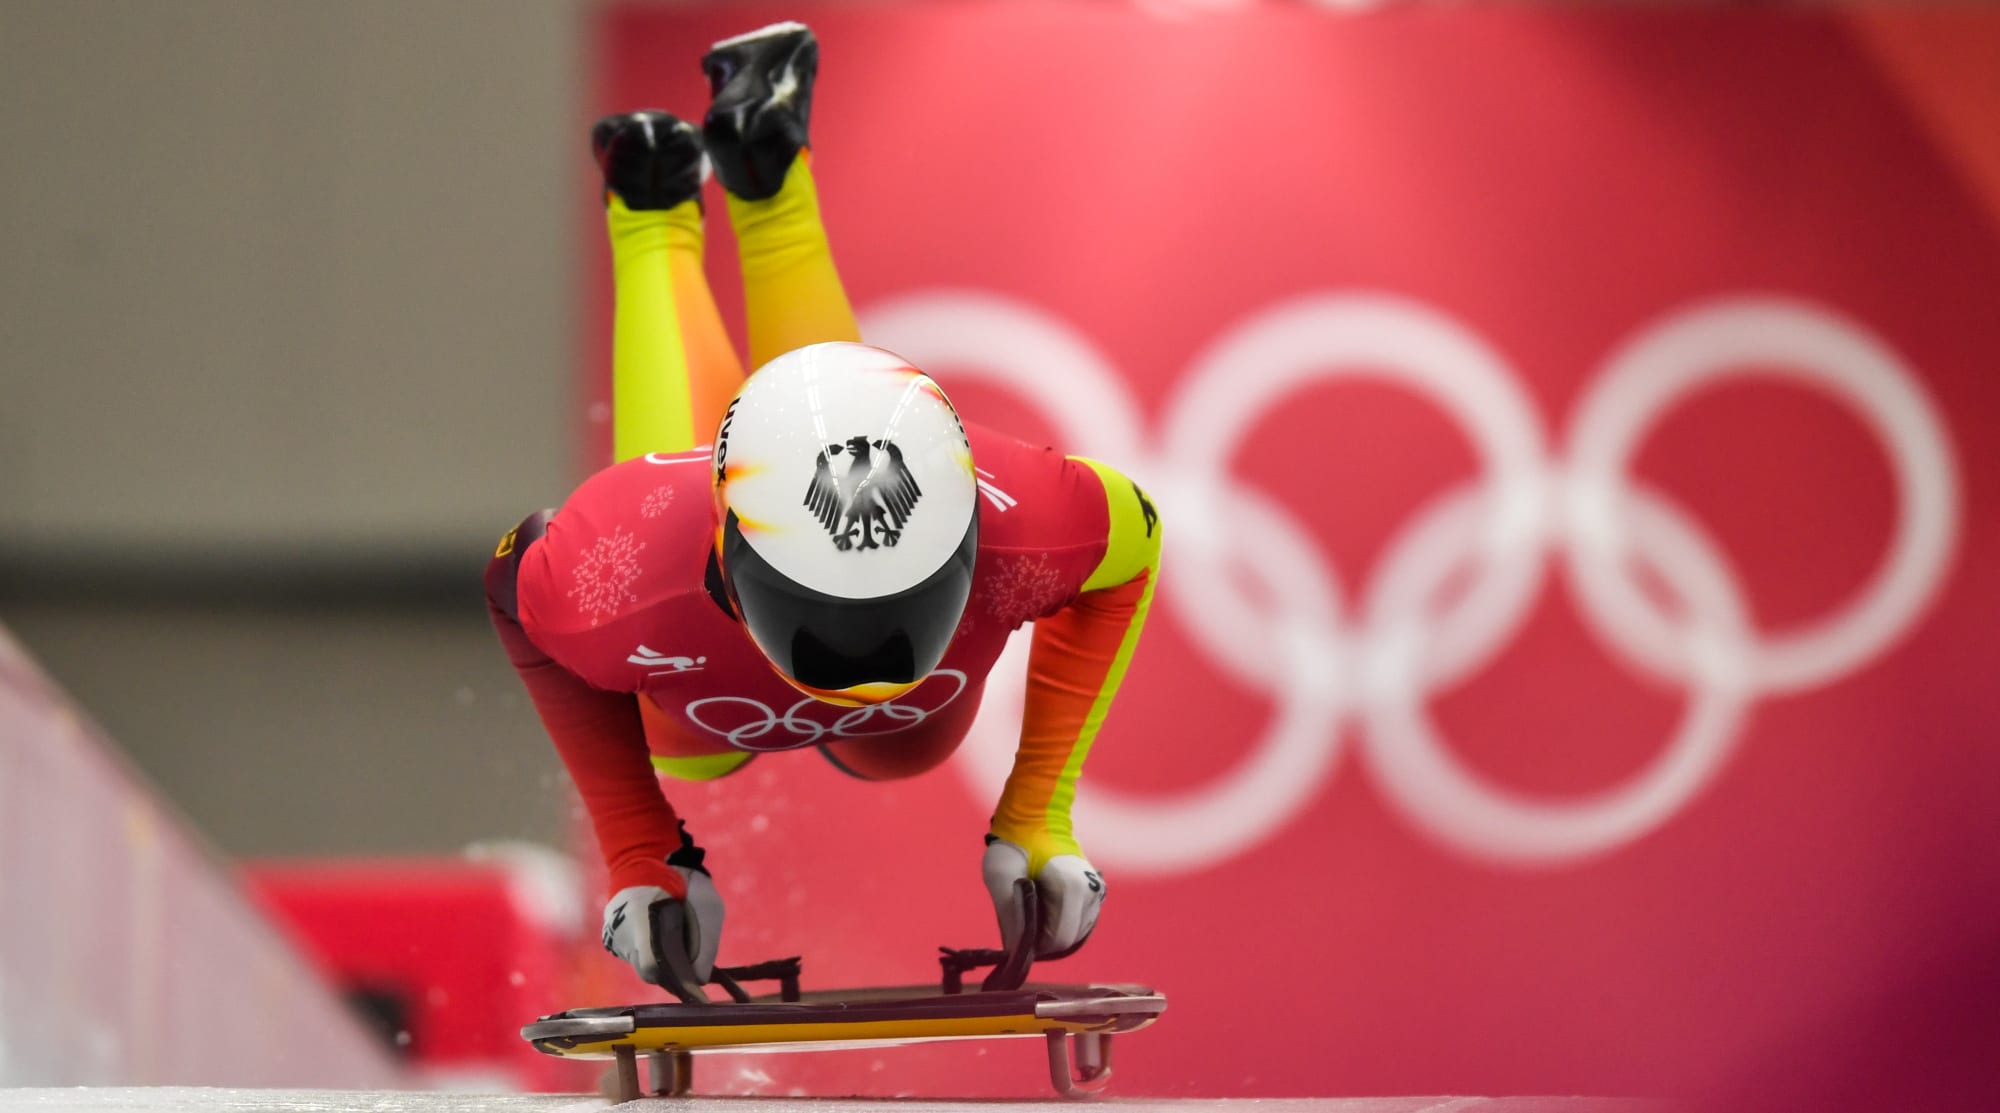 Winter Olympics Skeleton Women's qualifying medal results